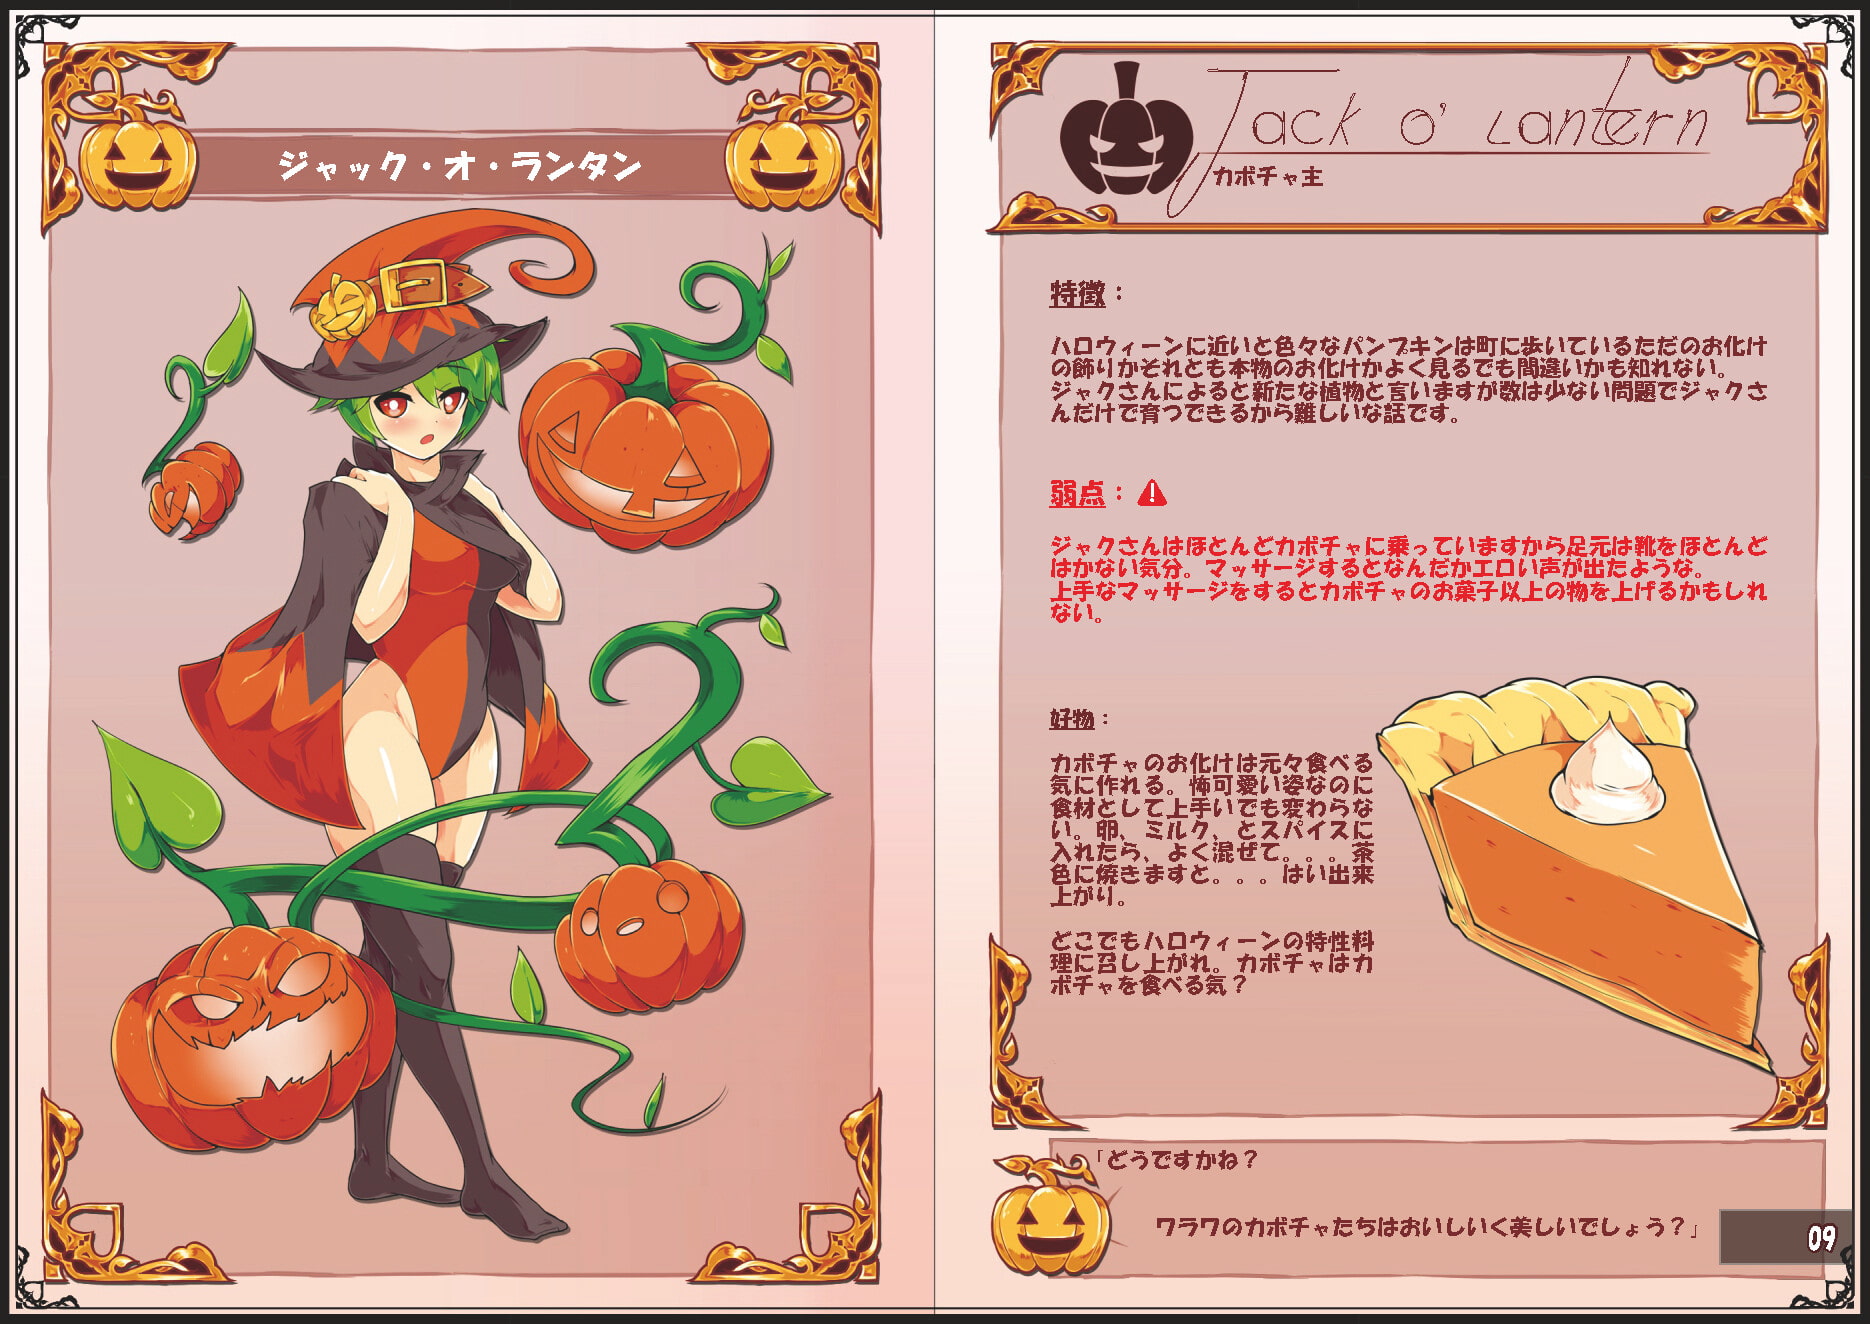 Codex Libido -Halloween-